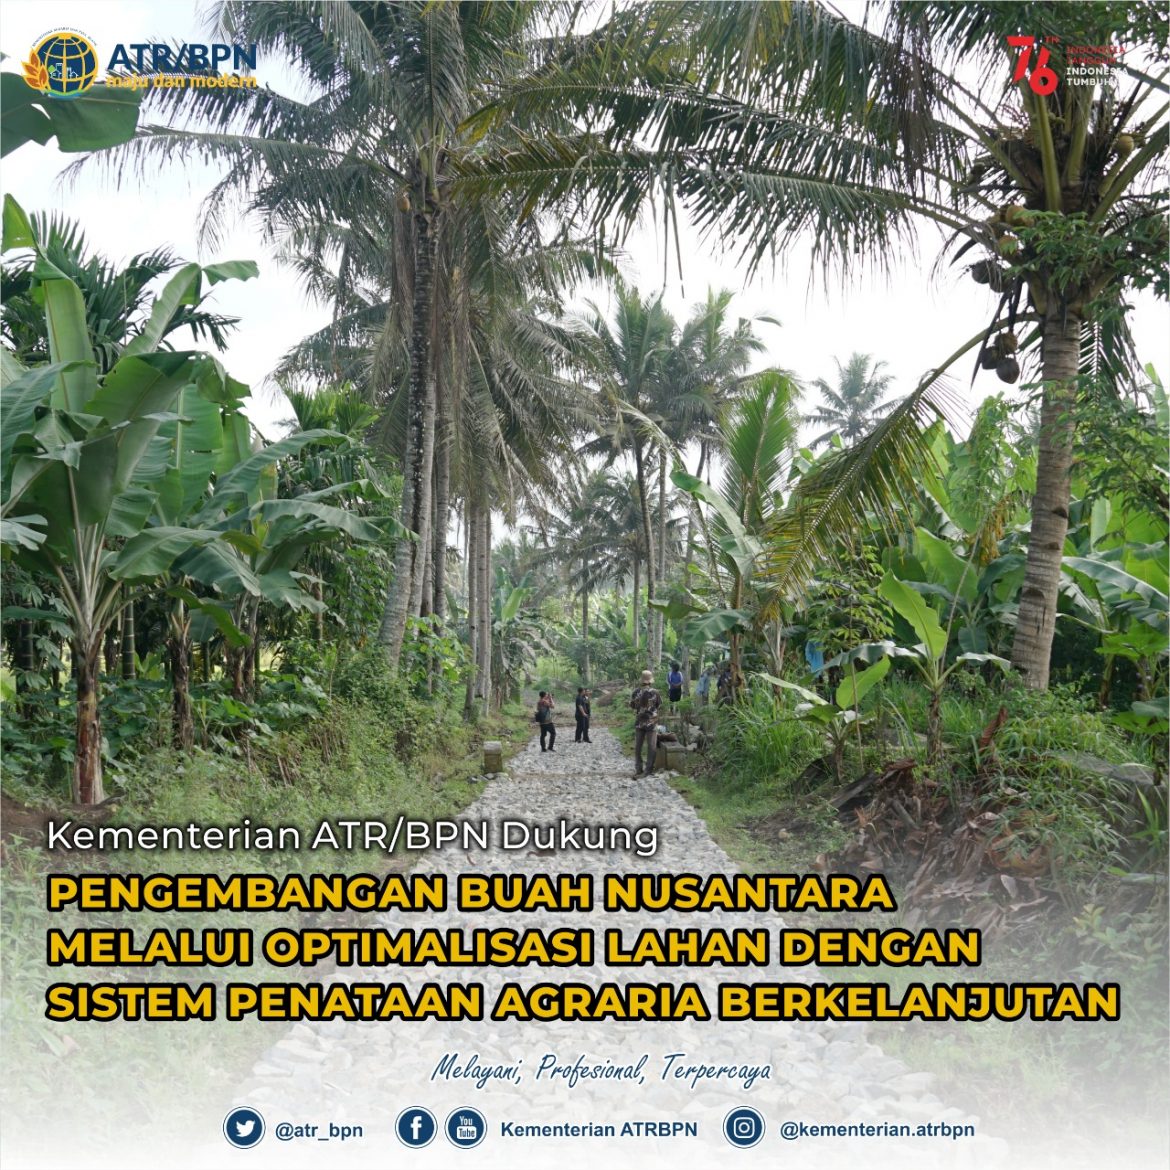 Kementerian ATR/BPN Dukung Pengembangan Buah Nusantara melalui Optimalisasi Lahan dengan Sistem Penataan Agraria Berkelanjutan